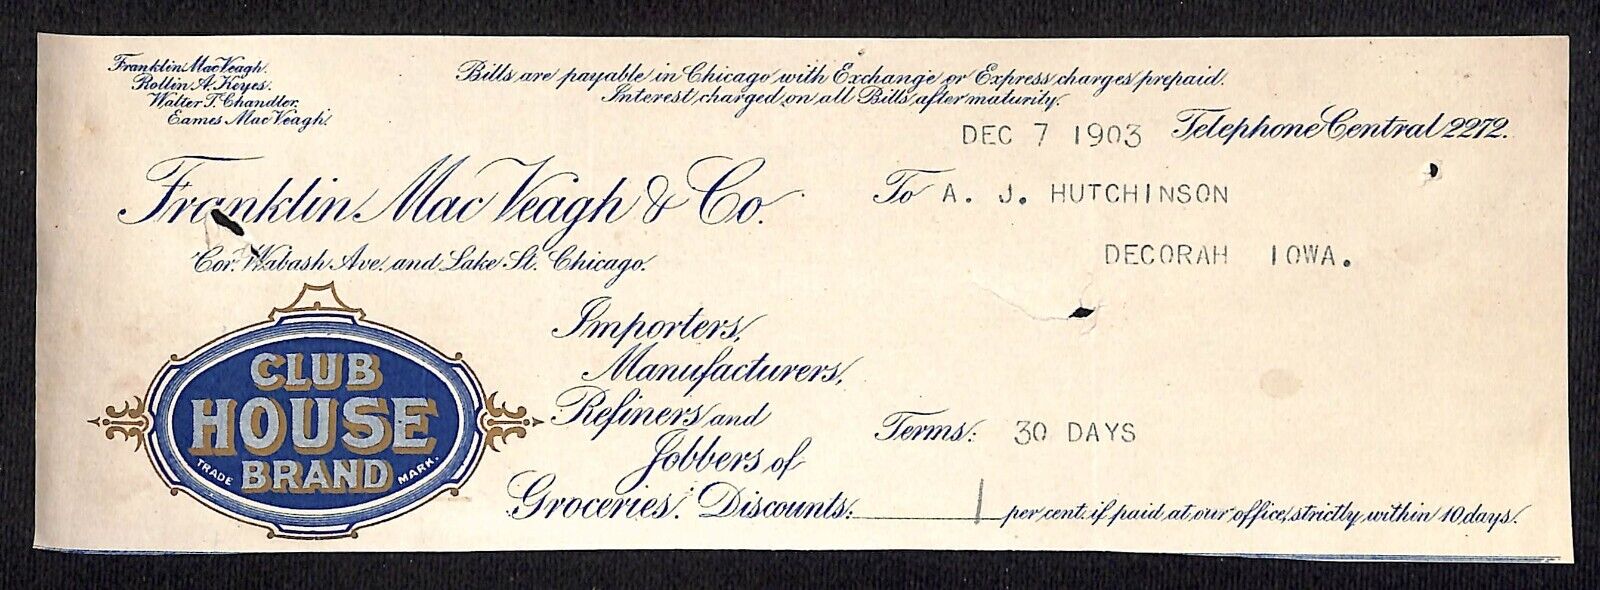 Franklin Mac Veagh Club House HJ Hutchinson Decorah, IA* Cut 1903 Billhead